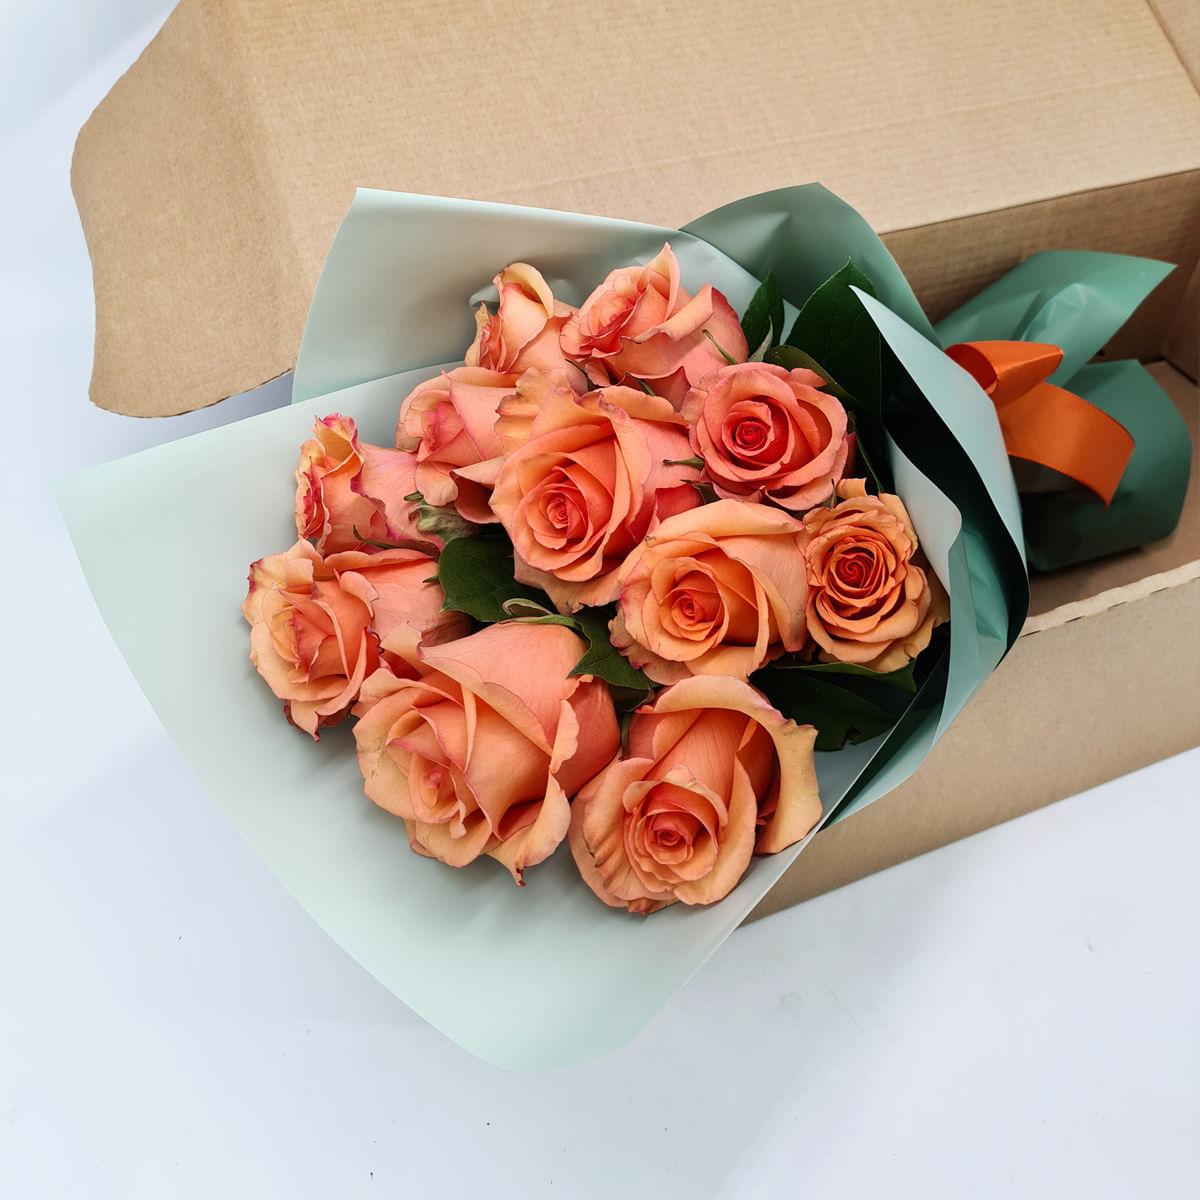 Buchet de 11 trandafiri portocalii in cutie floria.ro